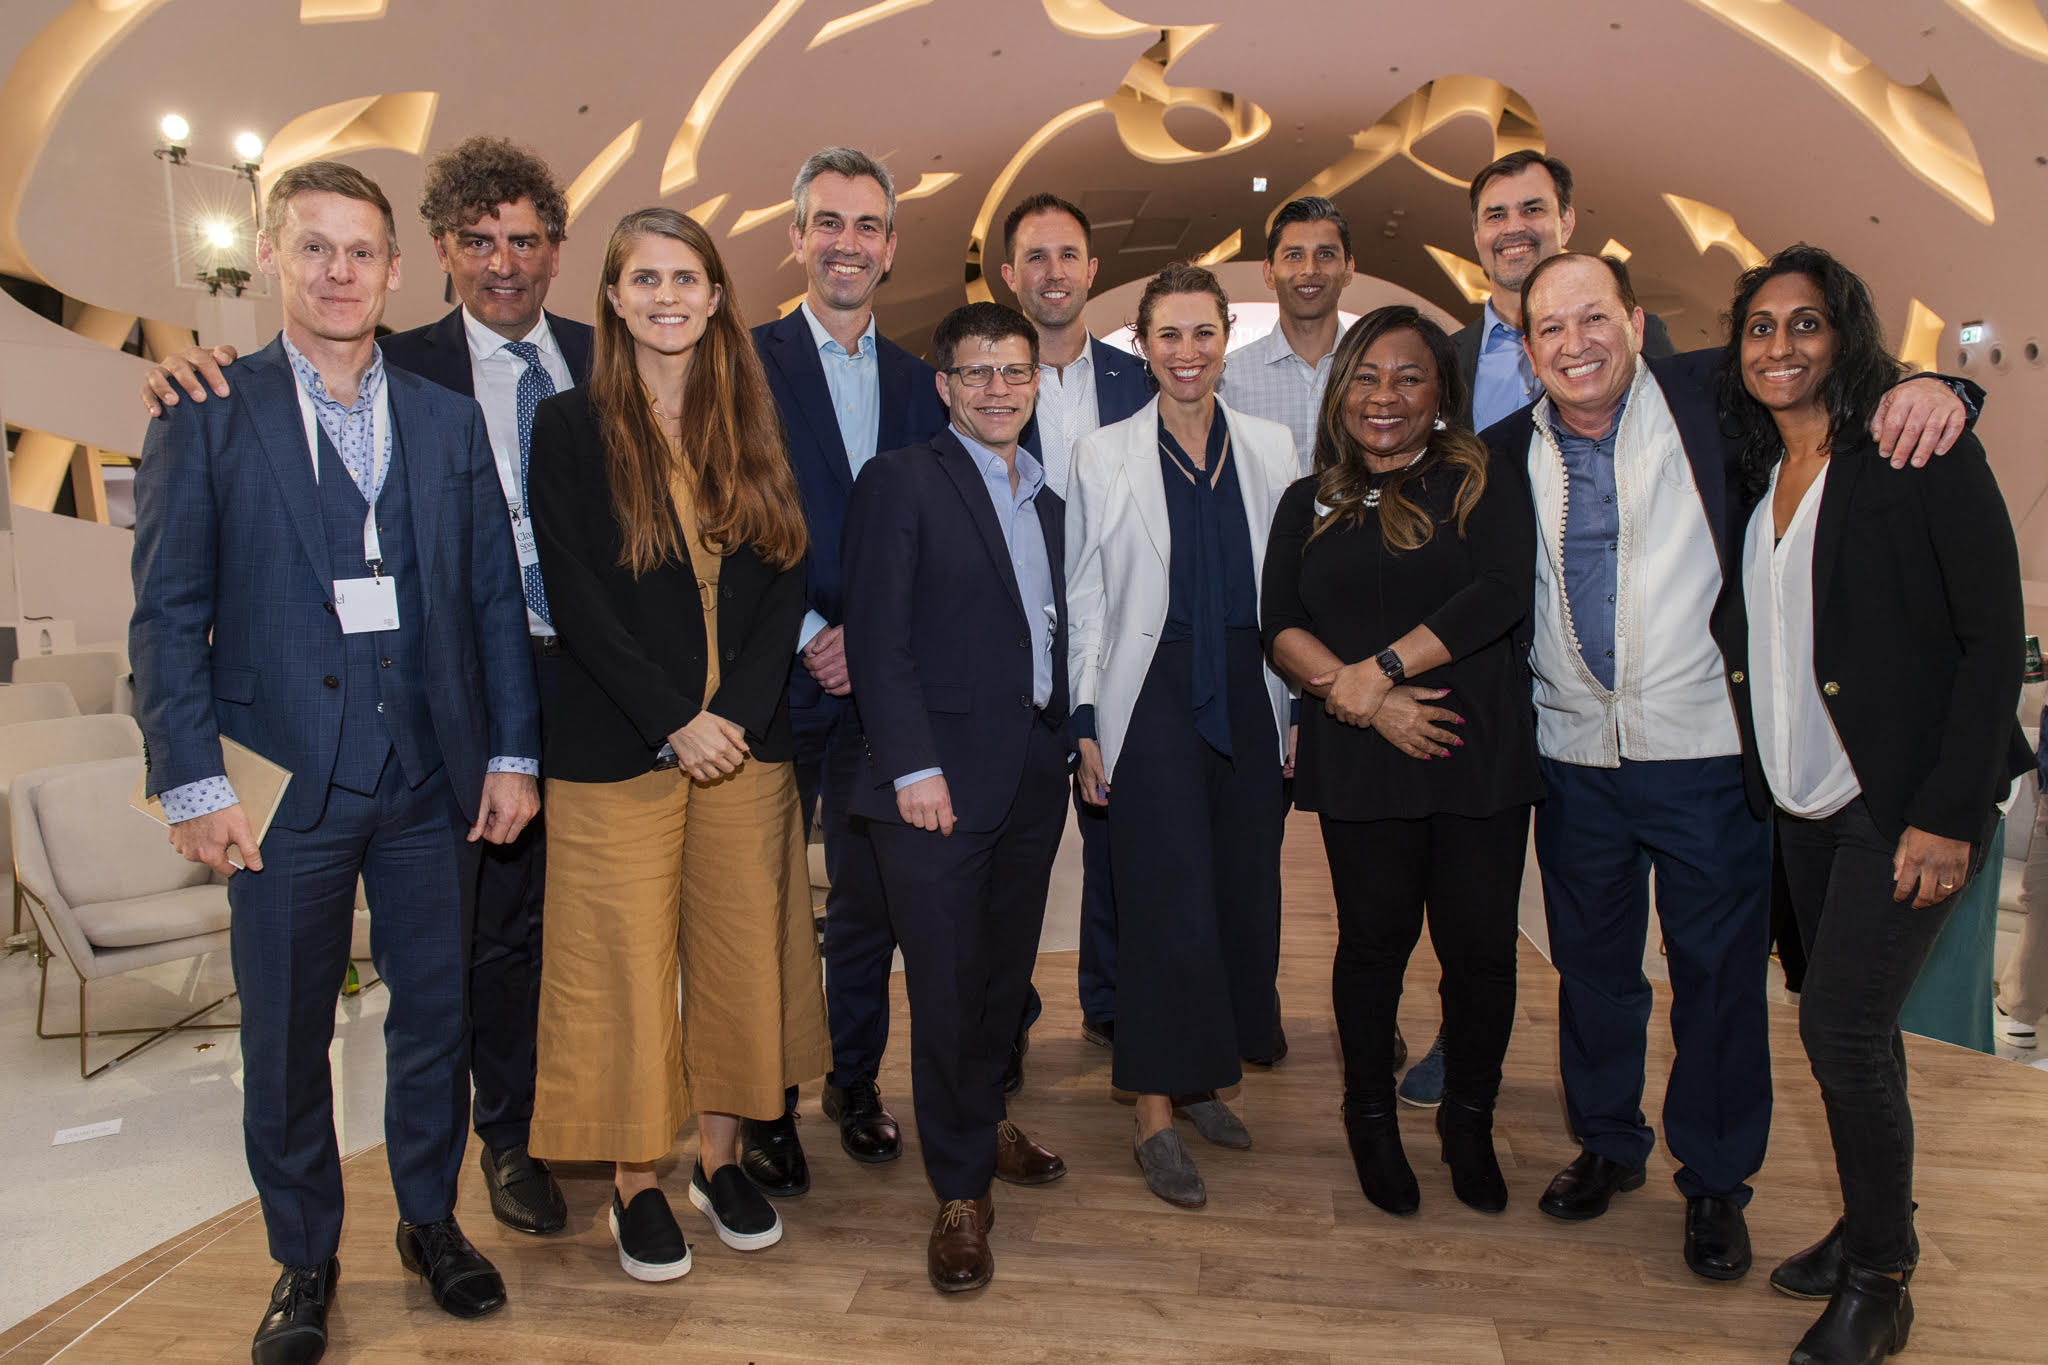 The Elemental team and portfolio company leaders smile together in Dubai.